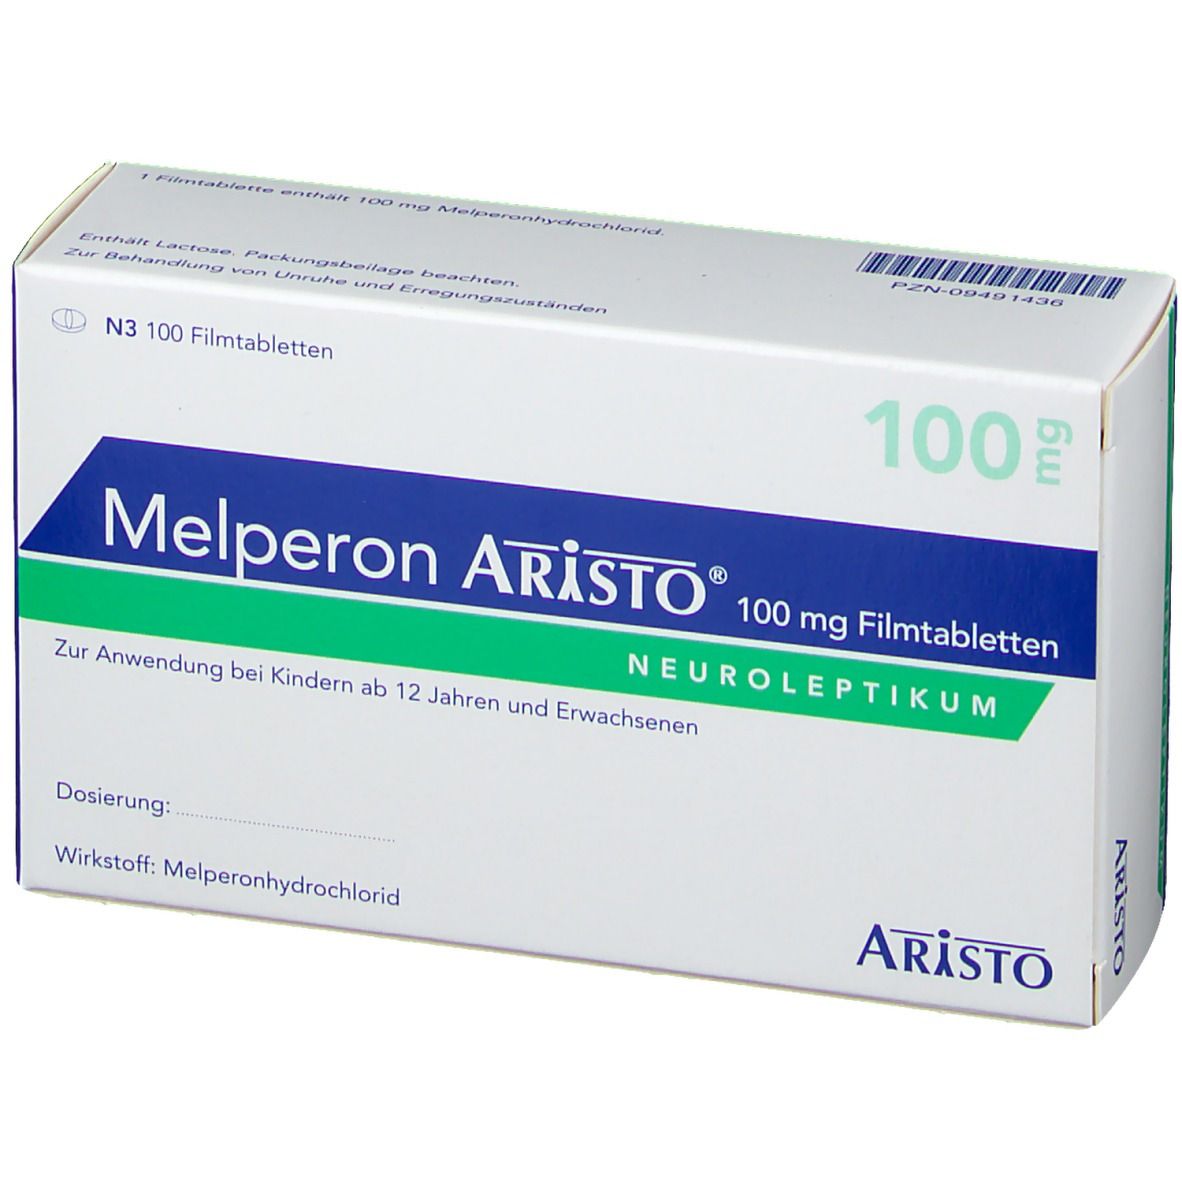 Melperon Aristo® 100 mg